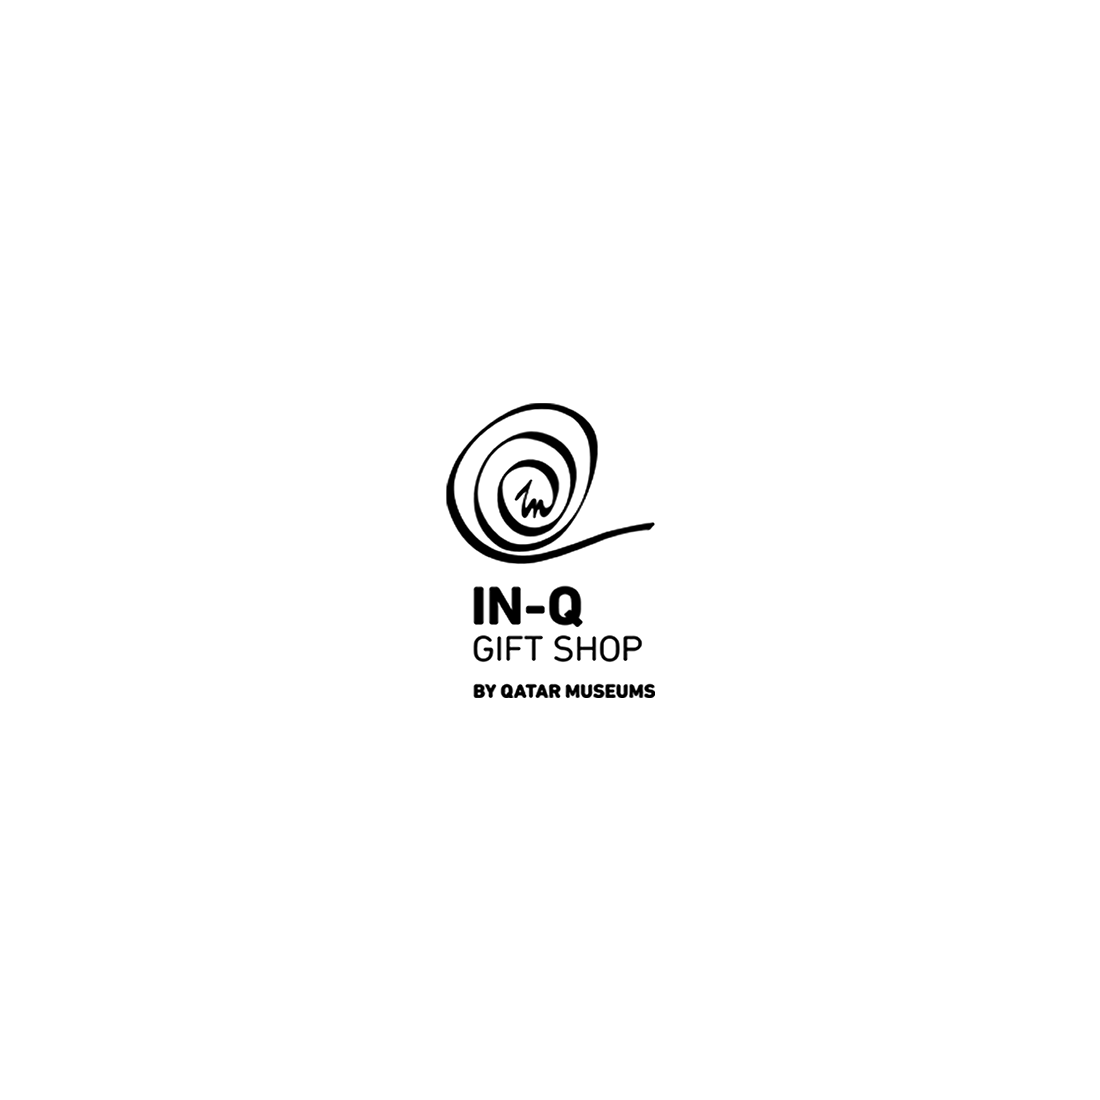 In-Q Pencil - Logo in Square Pattern